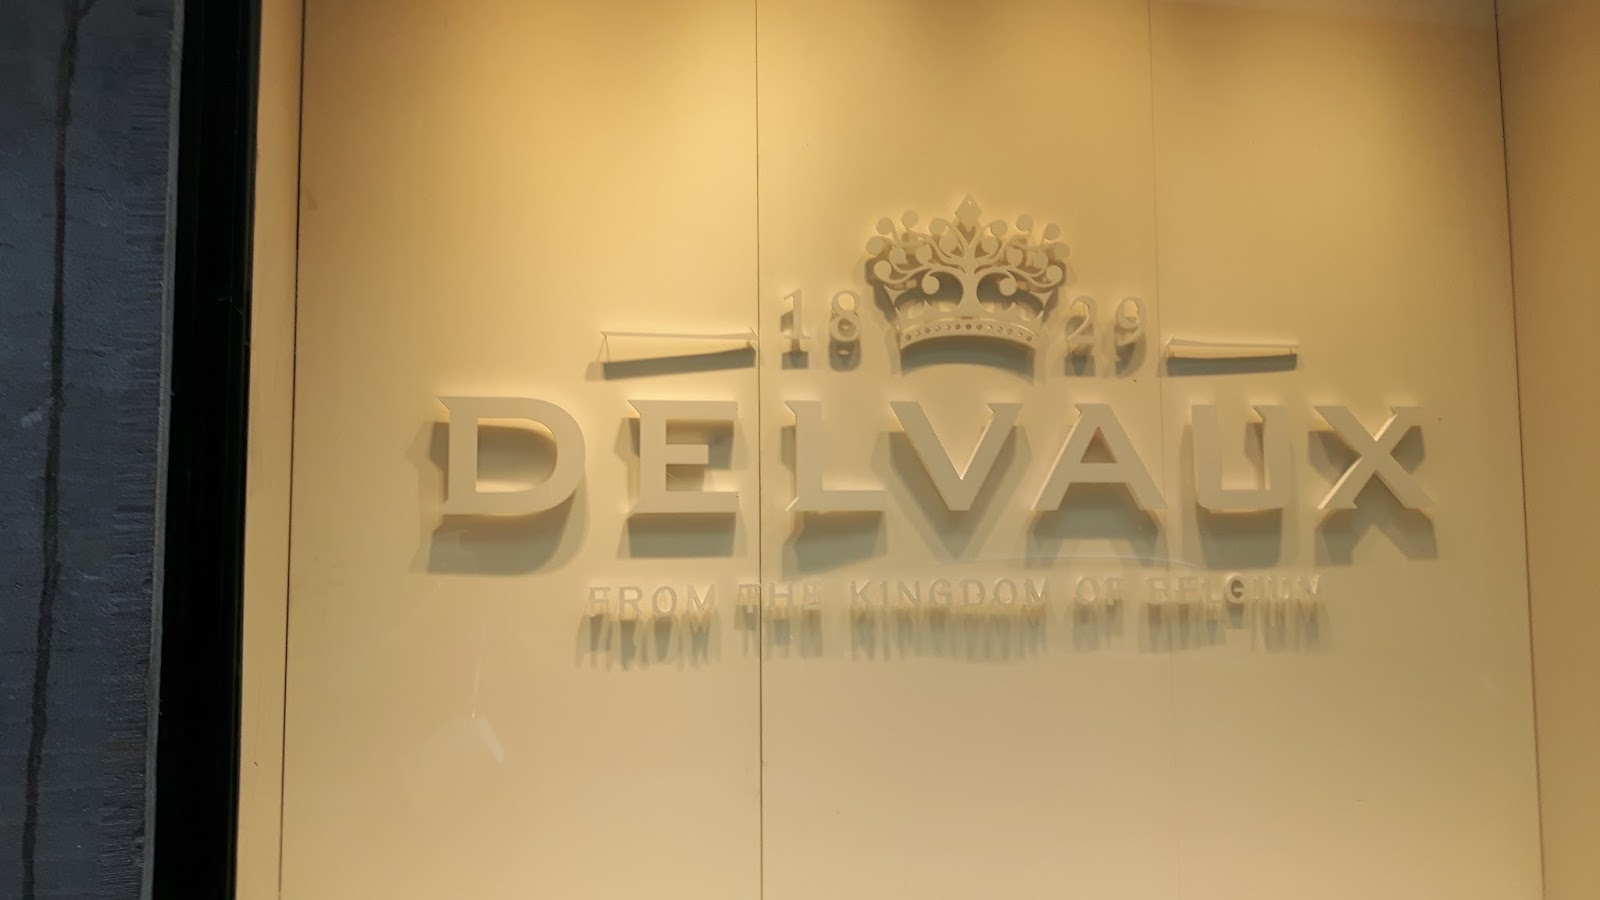 Delvaux in Brussels, Delvaux Handbags - Queen's Gallery - Royal